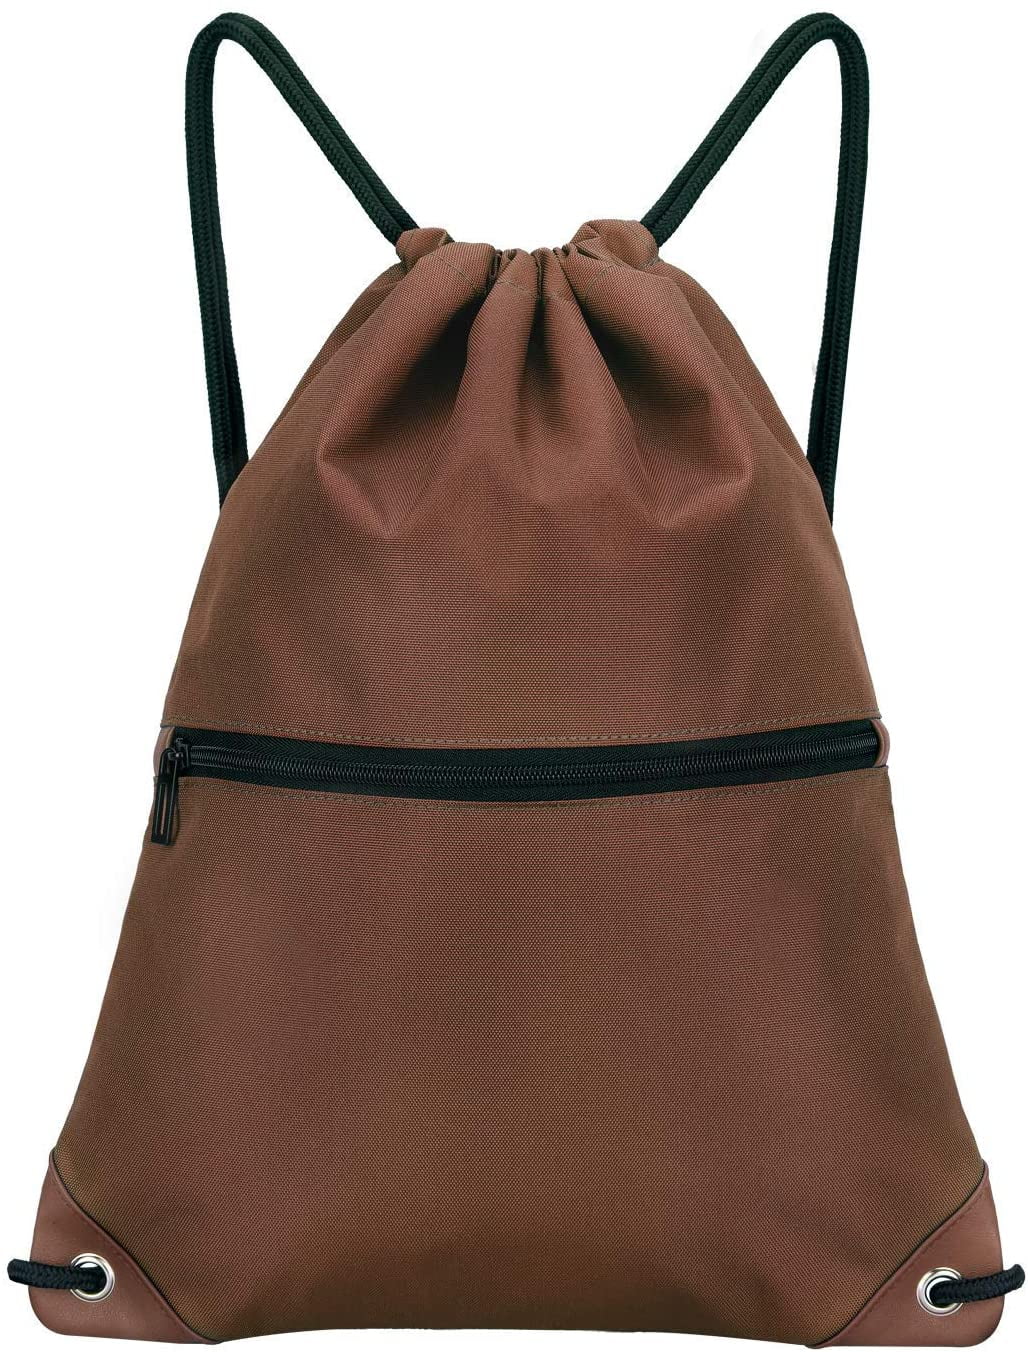 Drawstring Backpack Bulk String Bag Gym Sack Sports Sackpack with Zipper for Men Women Black&Orange, 2PCS